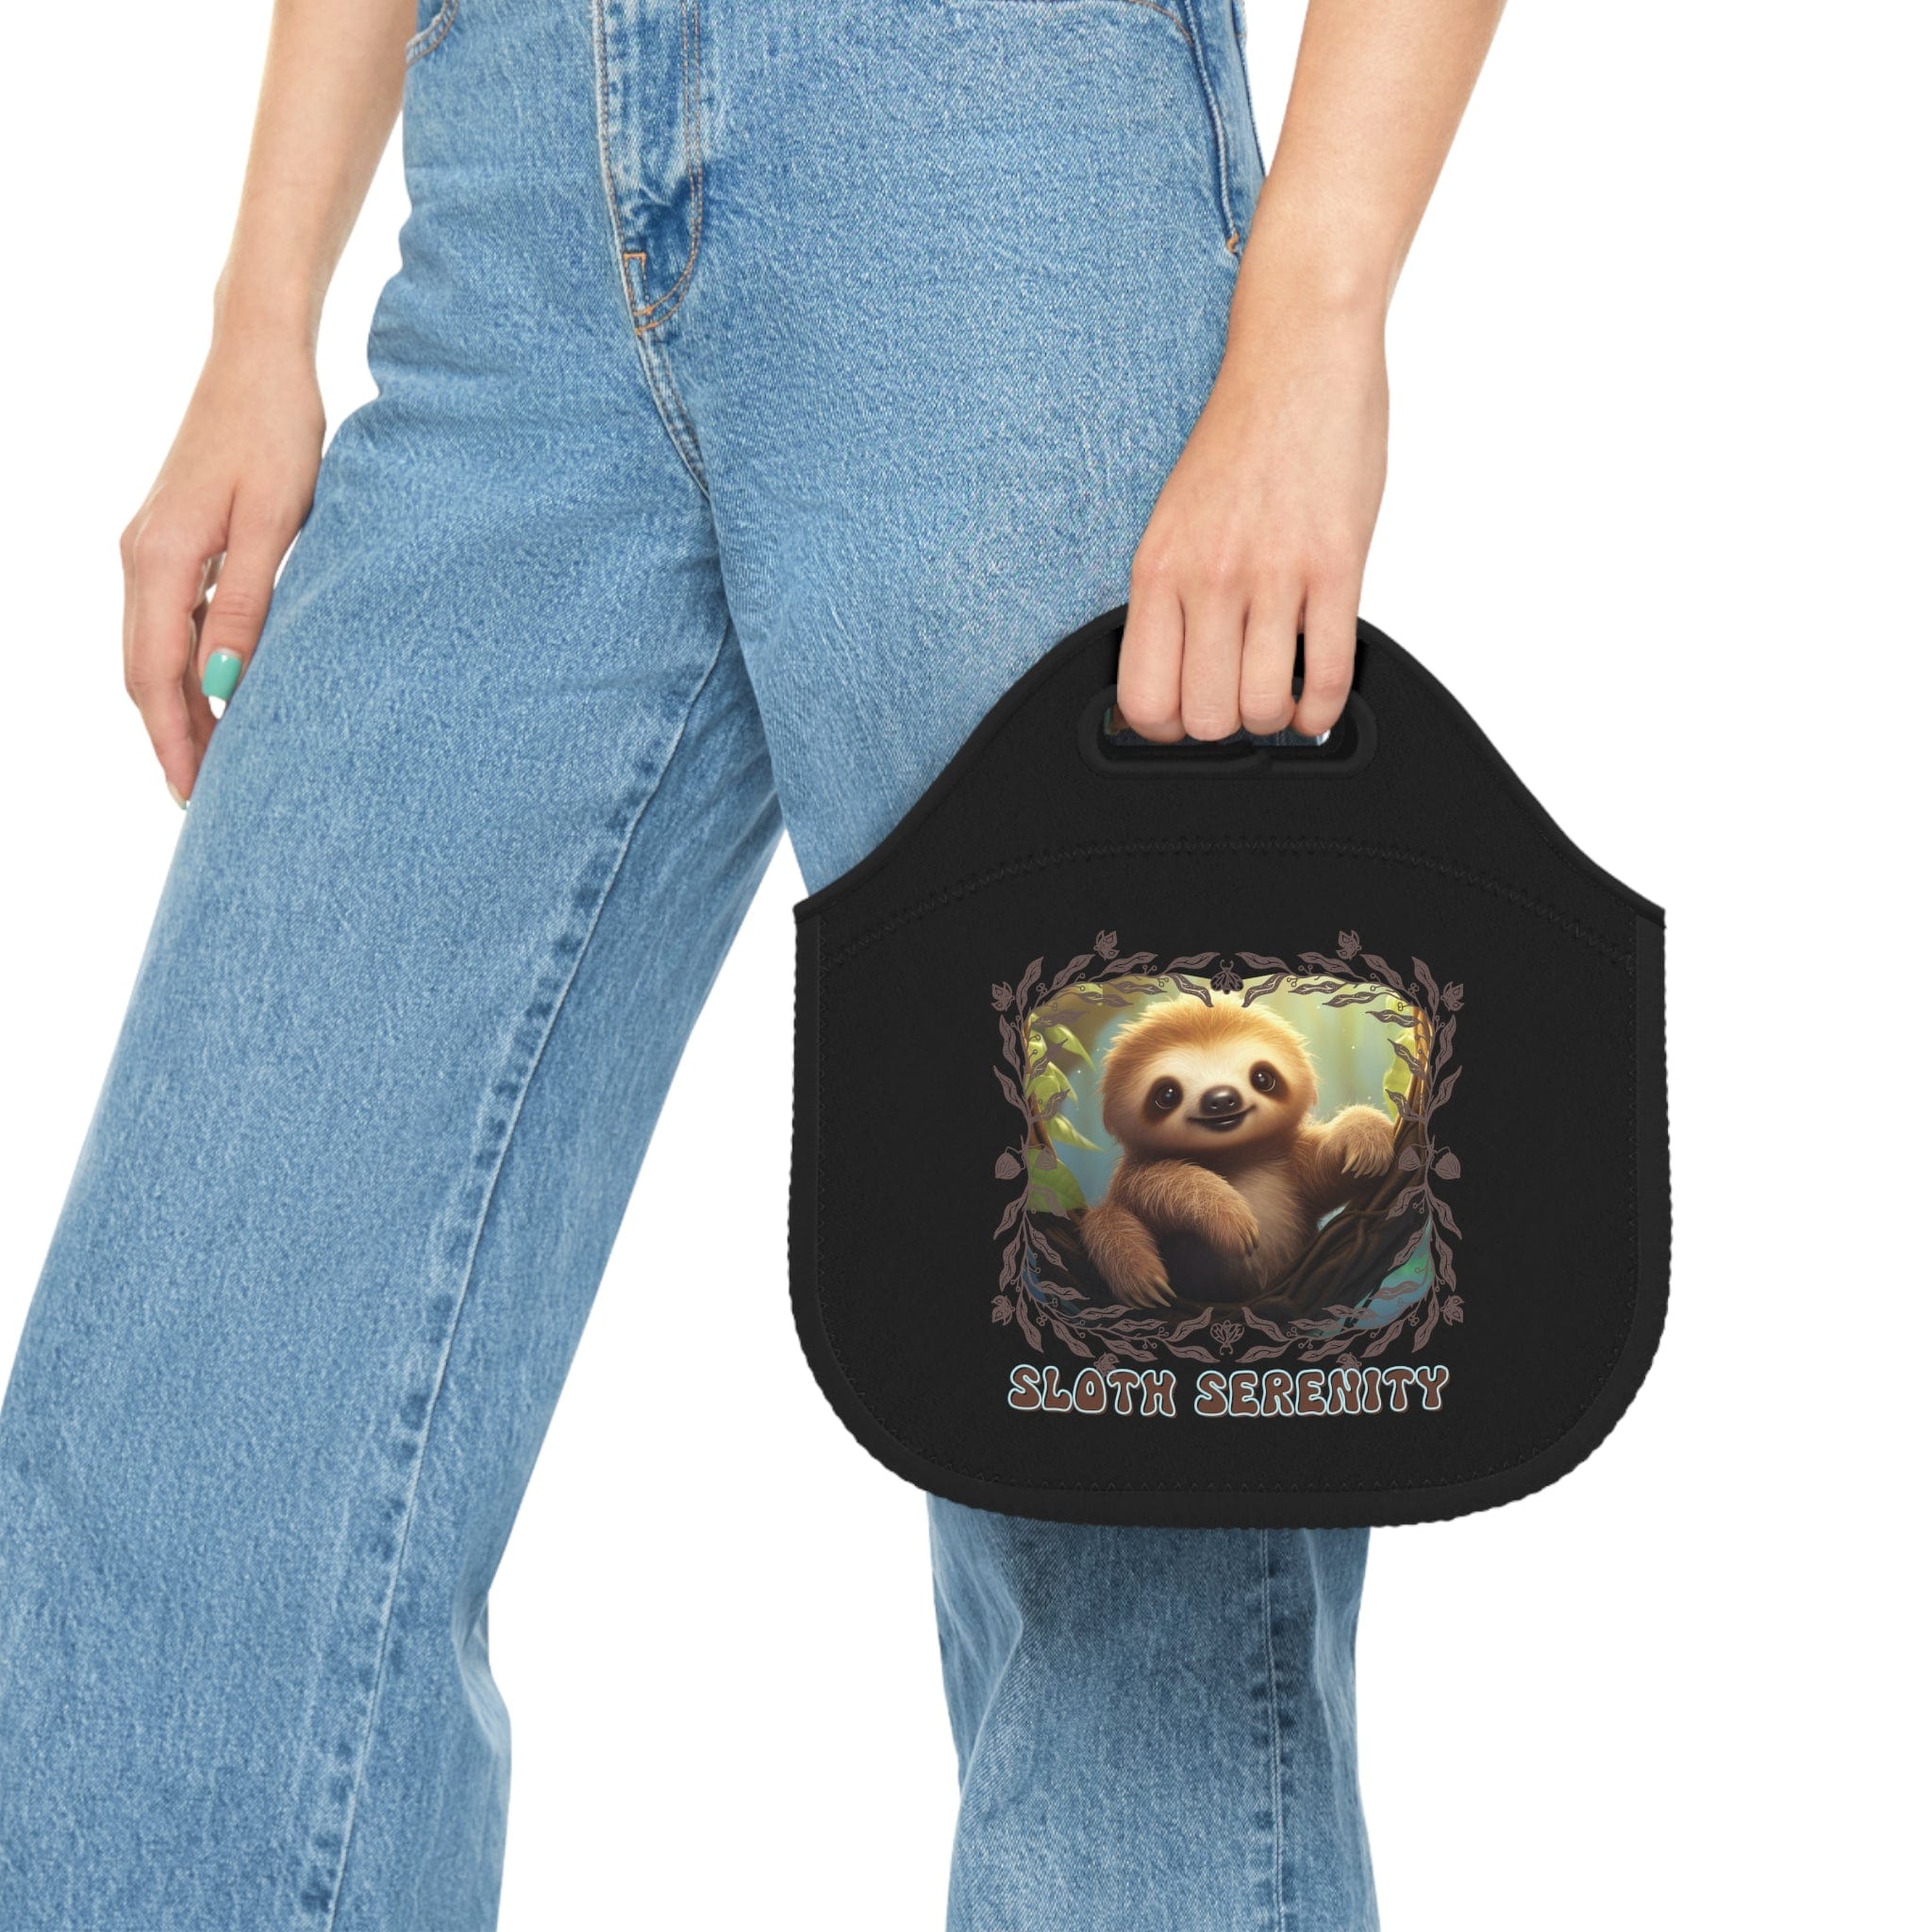 Printify Bags 12" × 12'' Sloth Serenity - Neoprene Black Lunch Bag